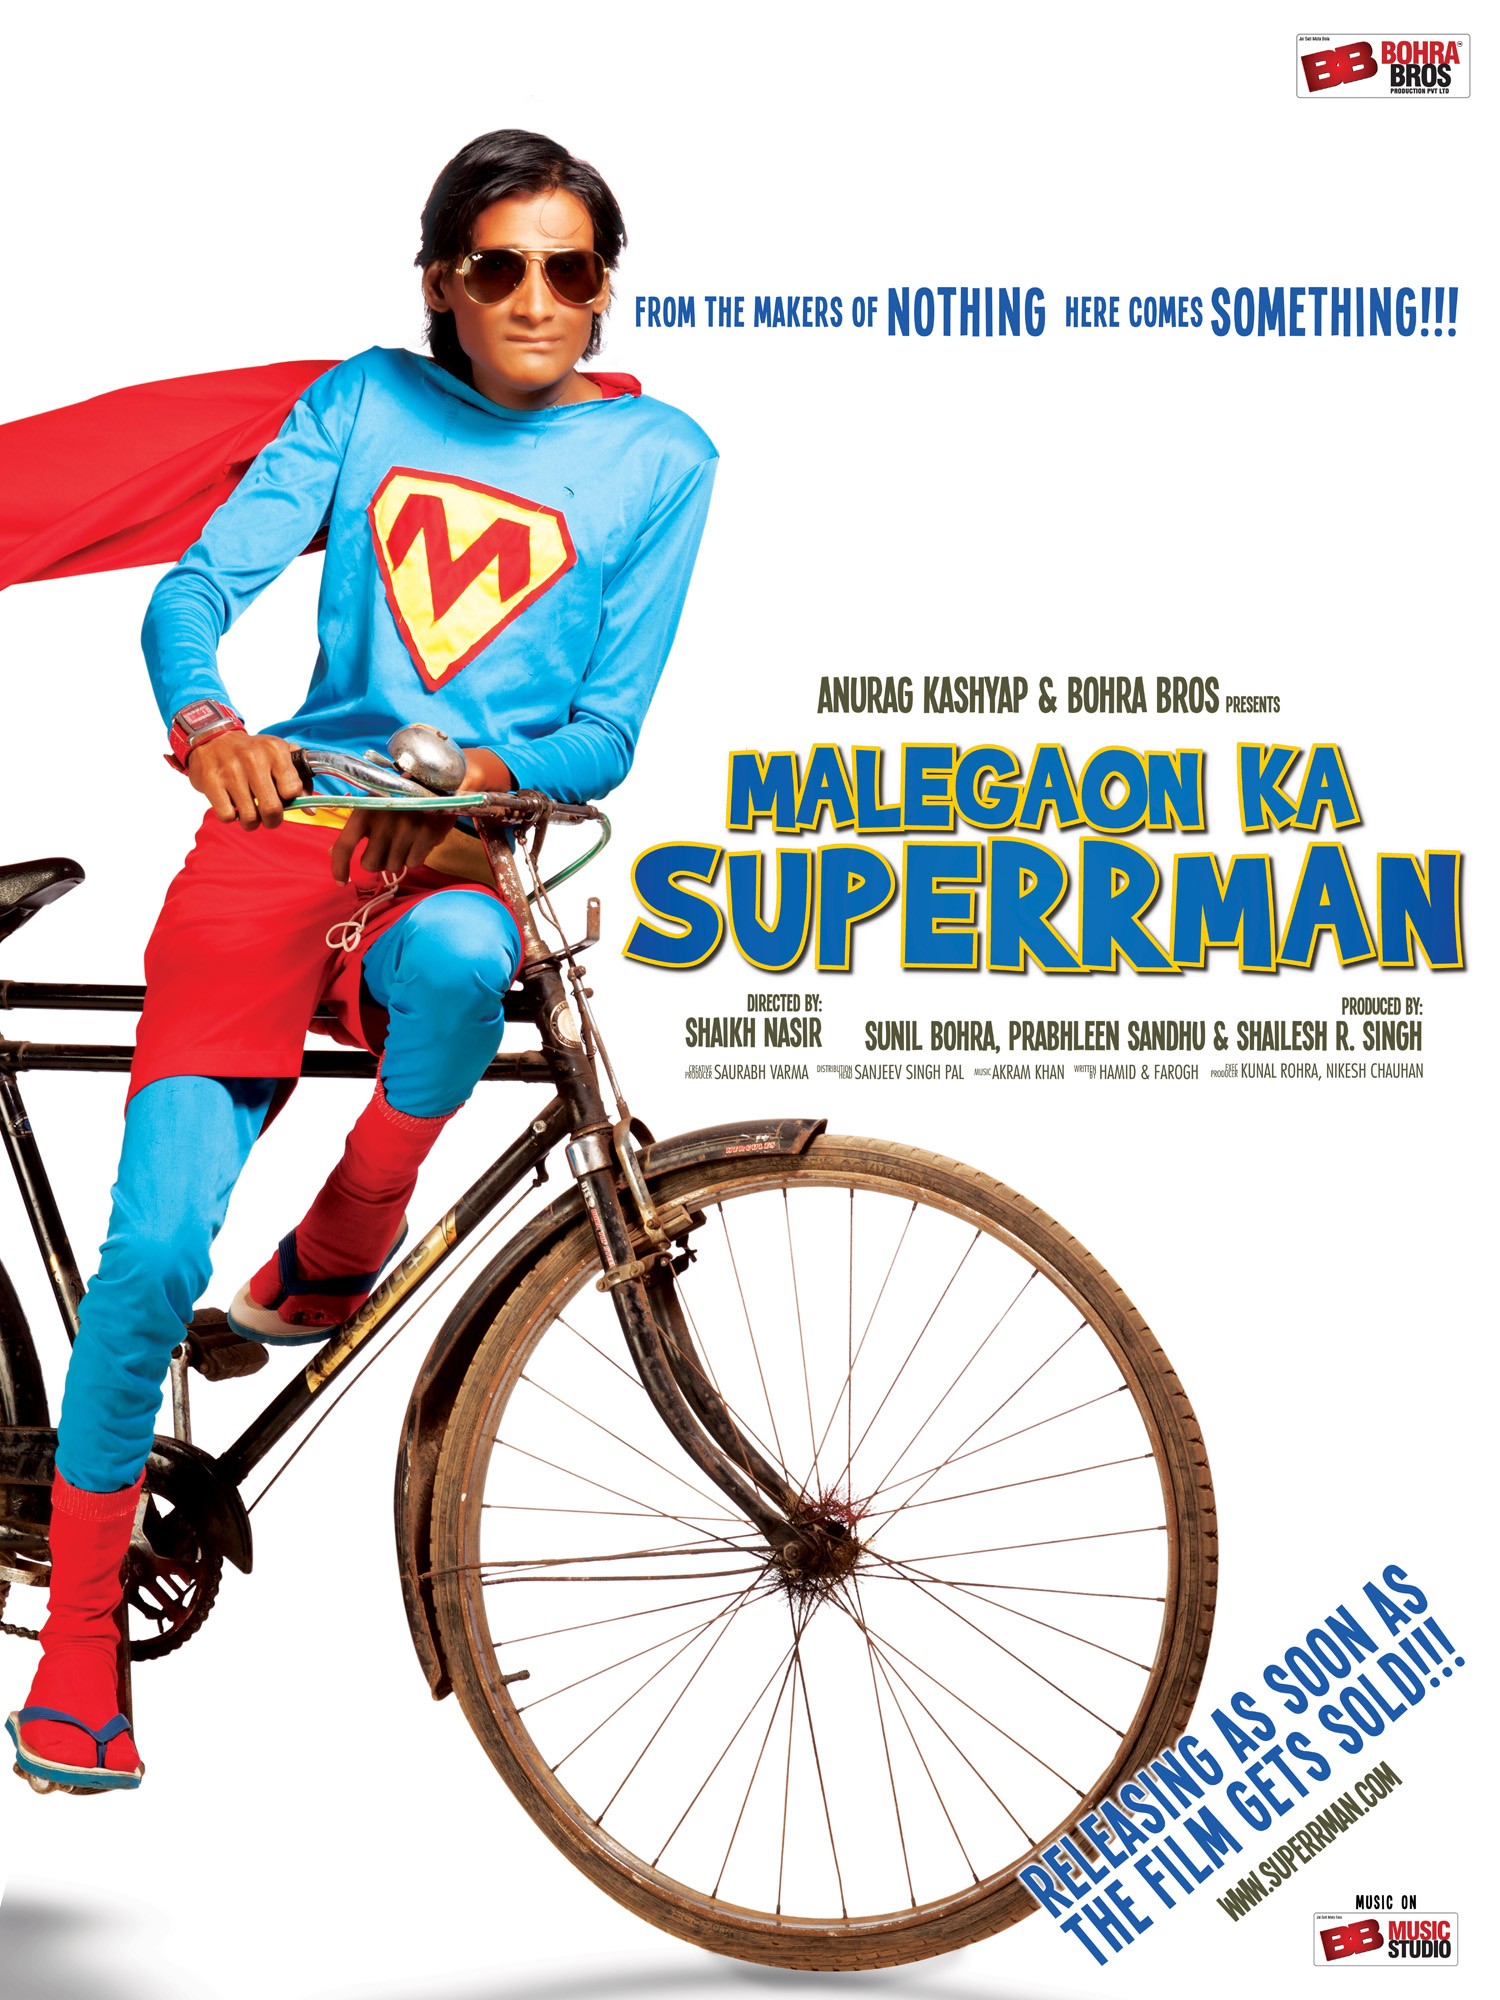 Mega Sized Movie Poster Image for Malegaon ka Superrman (#2 of 4)